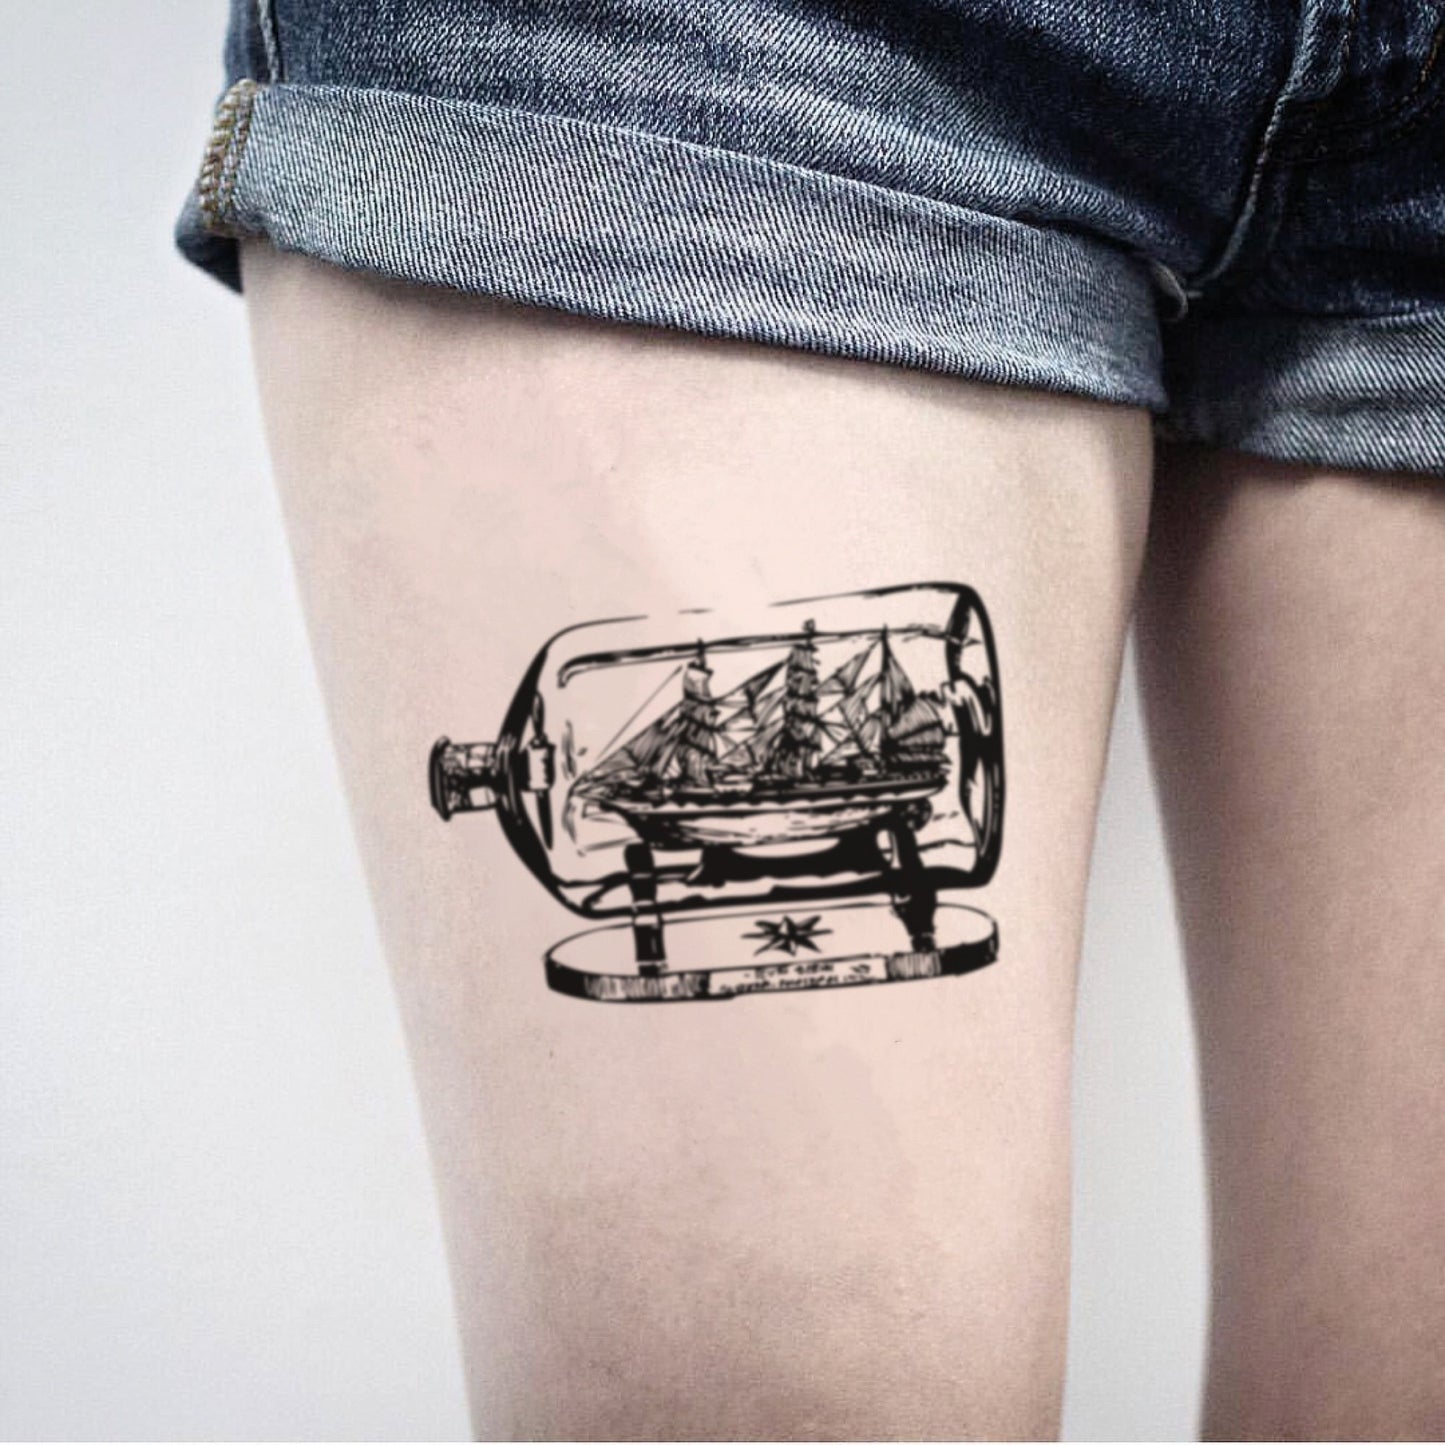 fake medium ship in a bottle vintage temporary tattoo sticker design idea on thigh